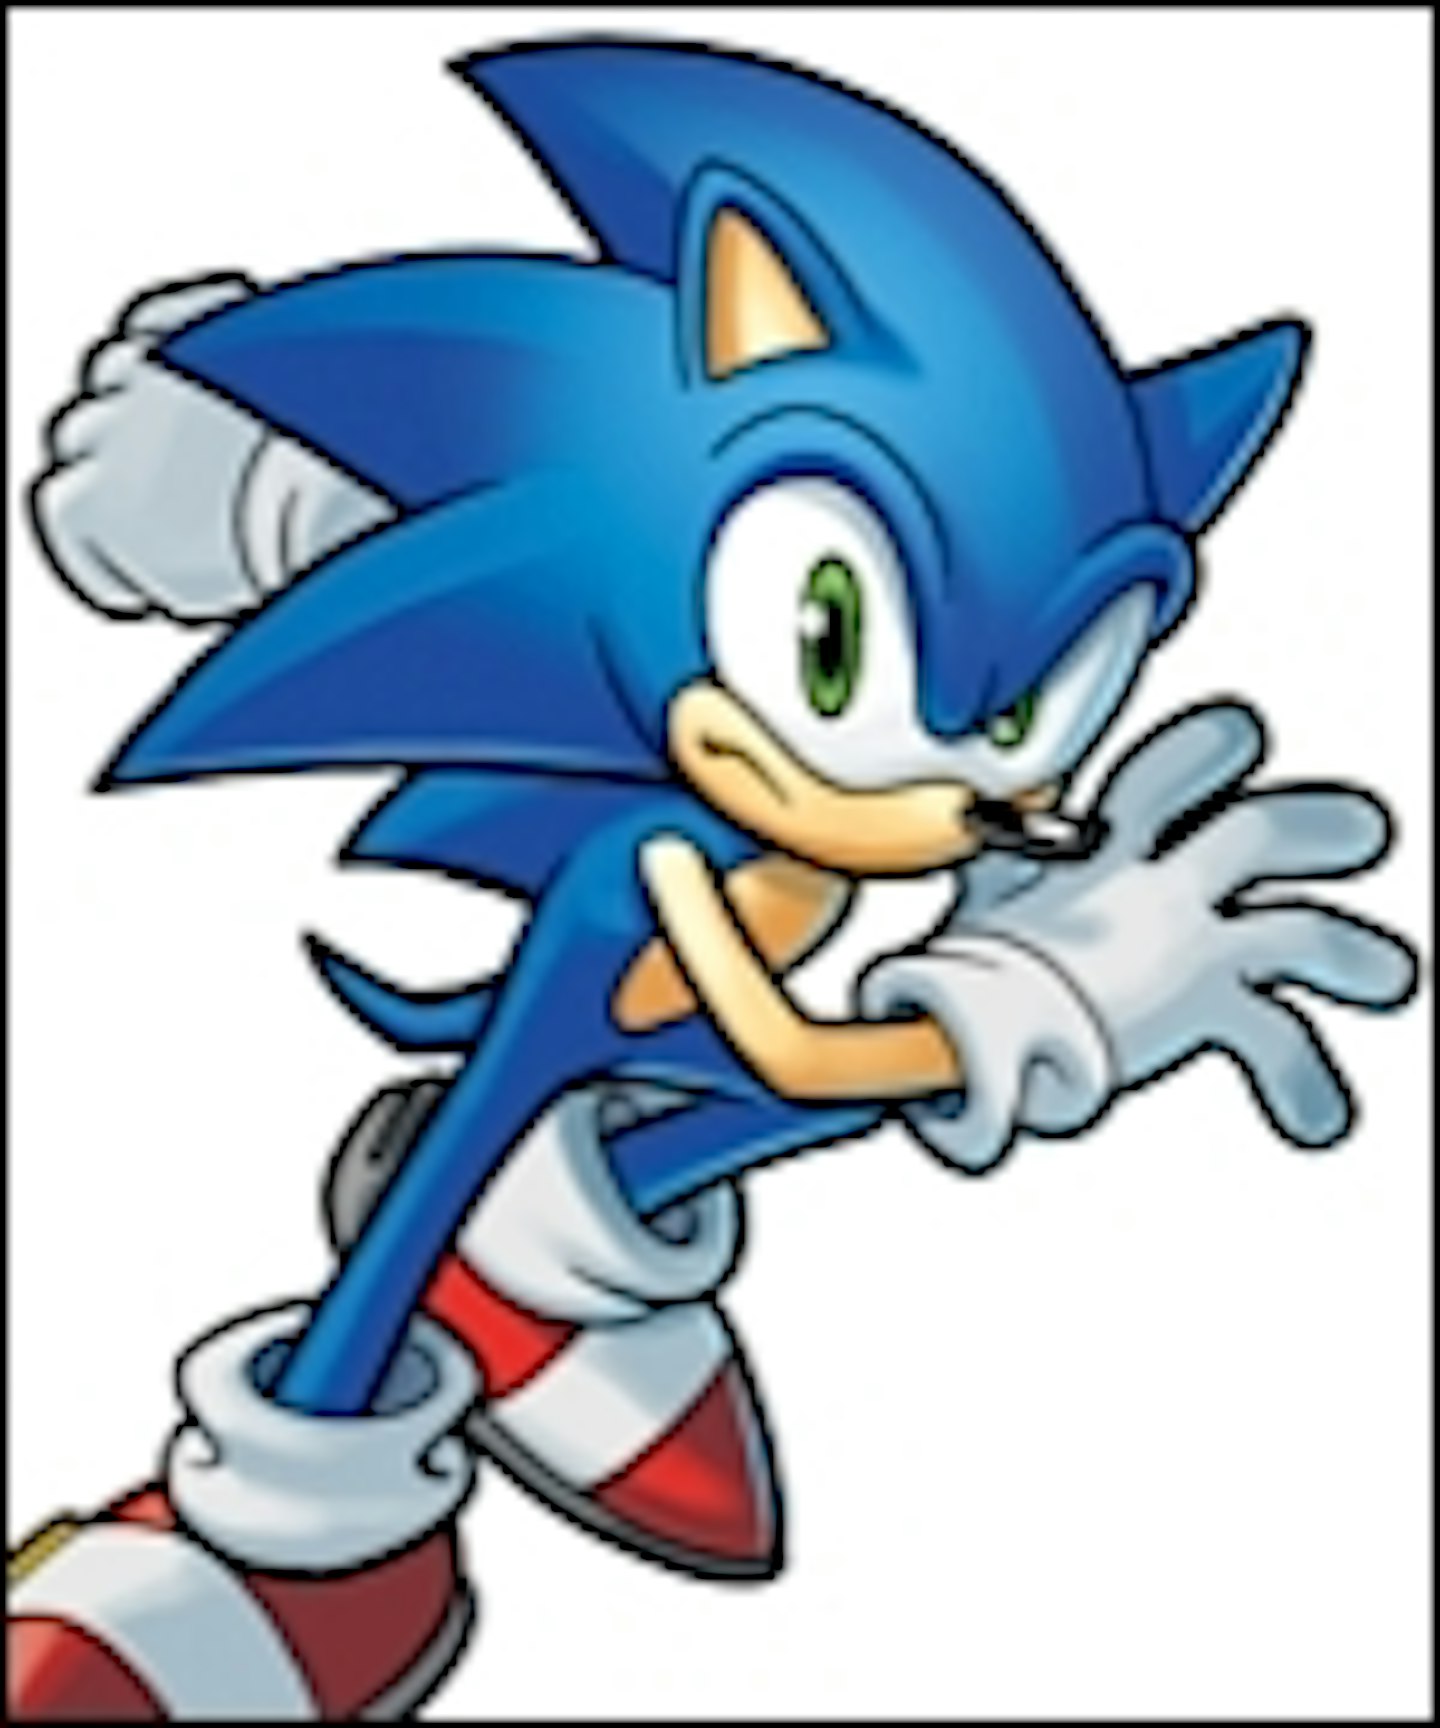 Sony Plans Sonic The Hedgehog Film